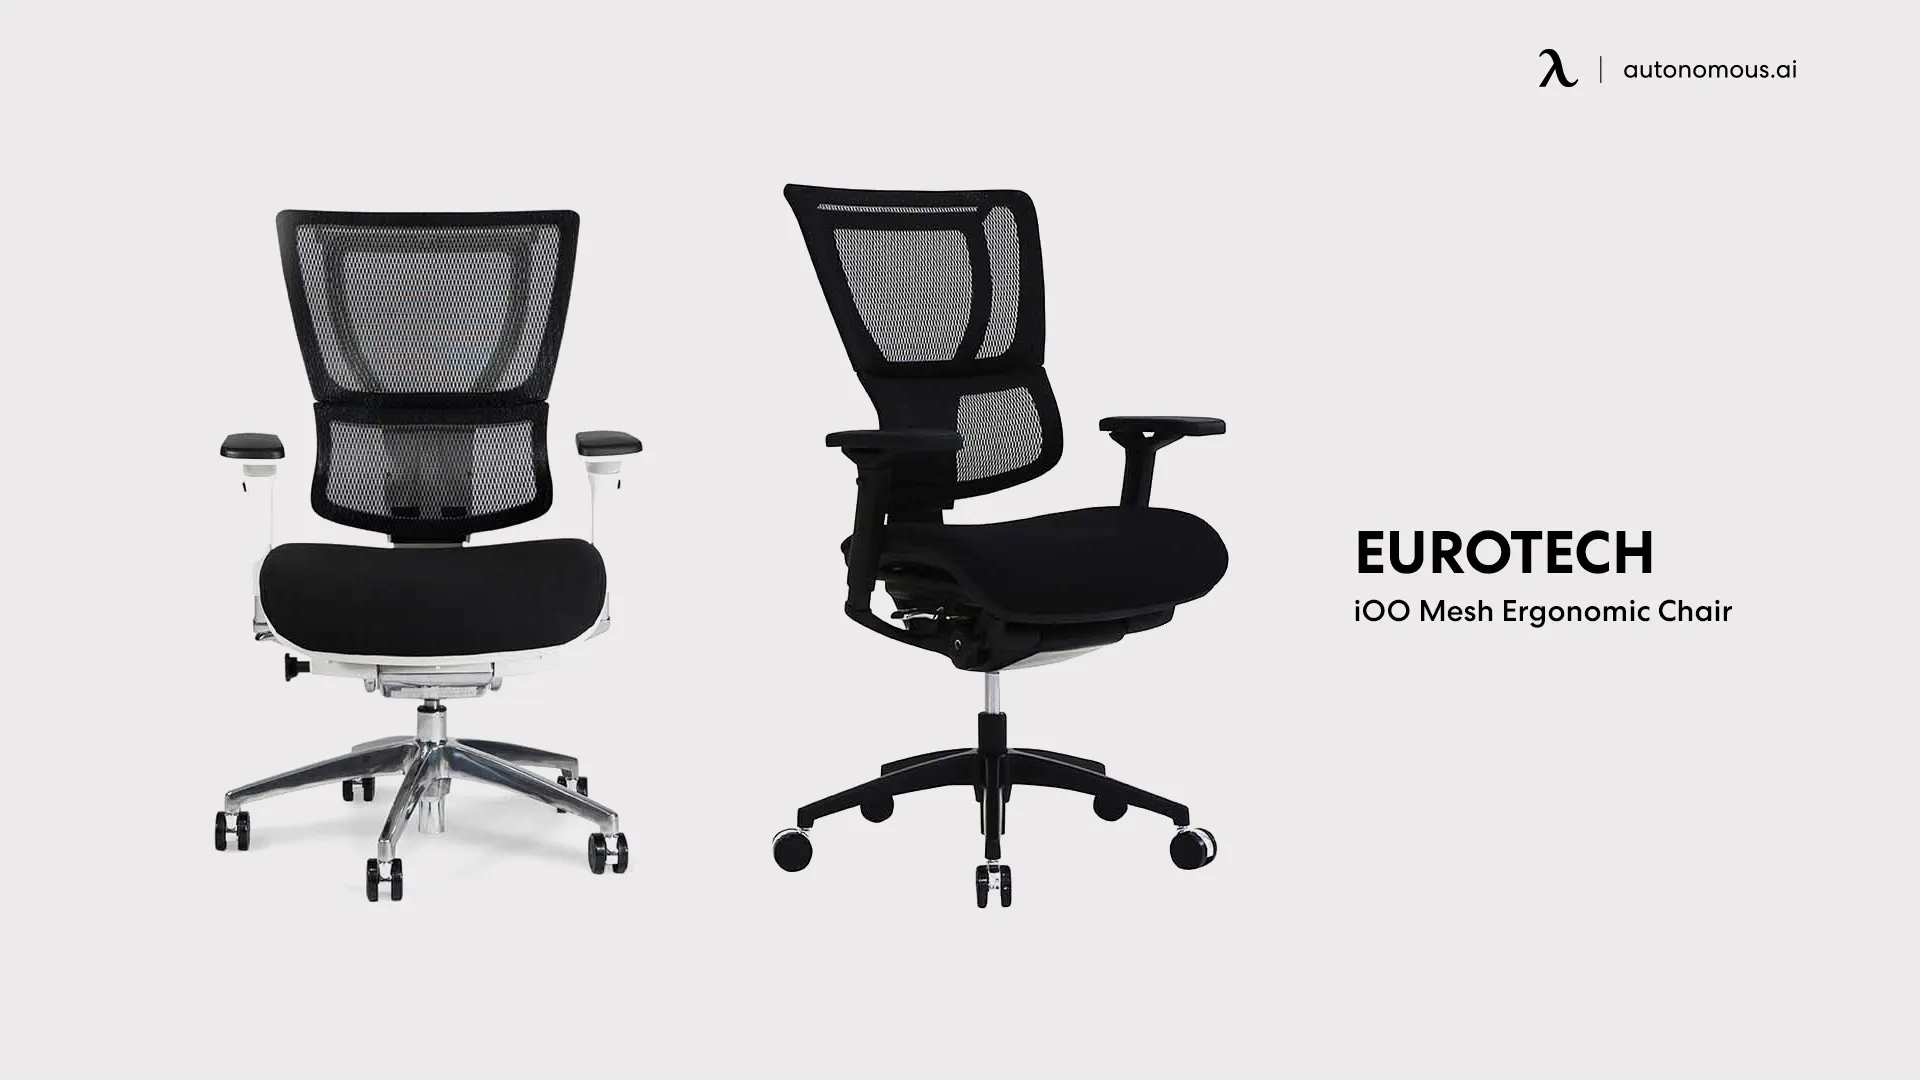 Eurotech iOO mesh gaming chair